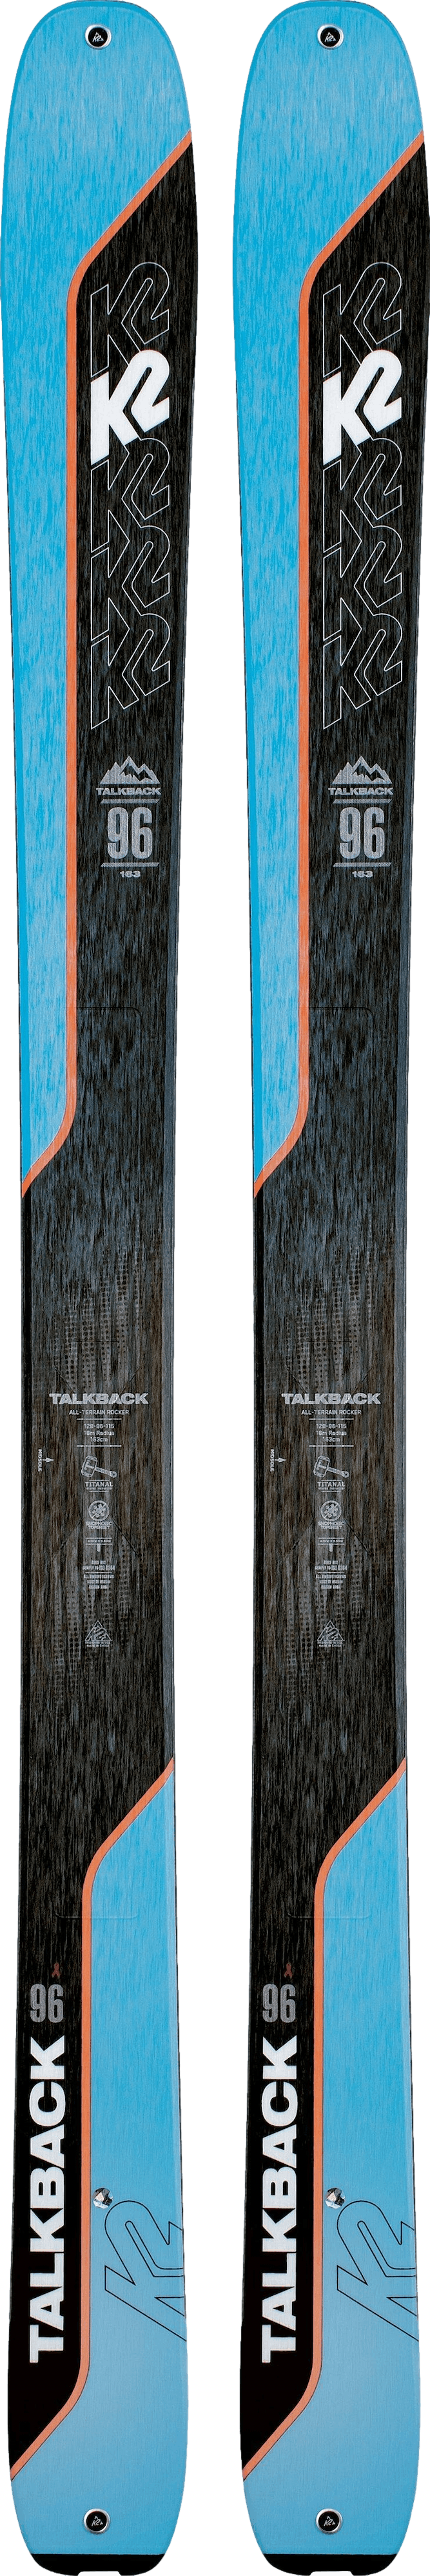 K2 Talkback 96 Skis · Women's · 2022 · 156 cm